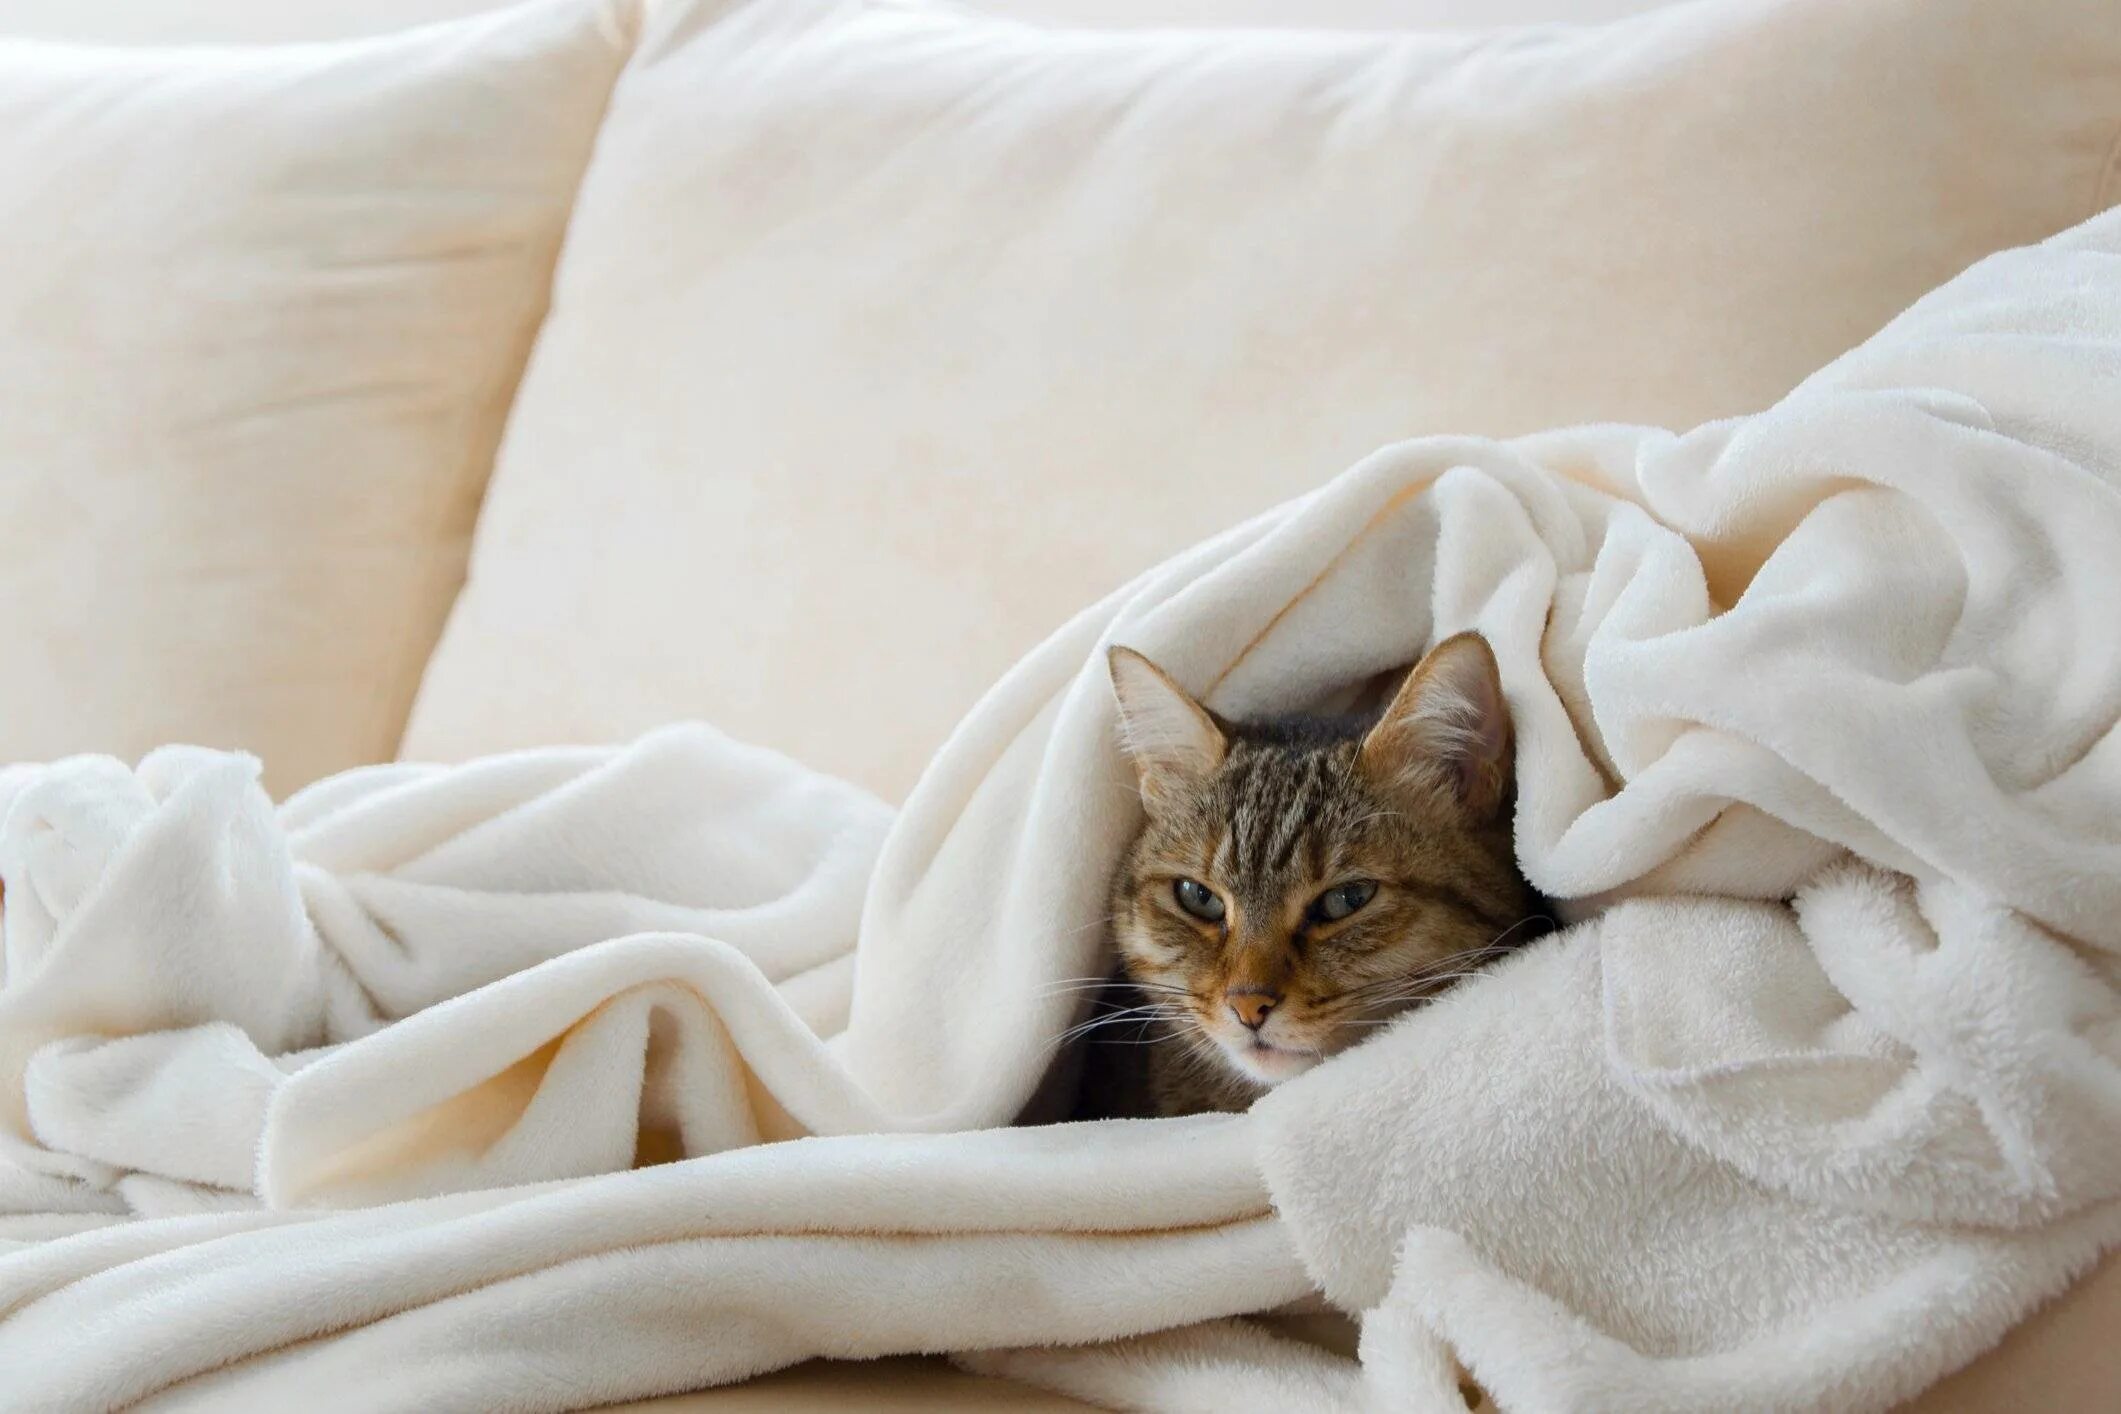 Кот под одеялом. Кошка в одеяле. Кот из под одеяла. Расслабленная кошка